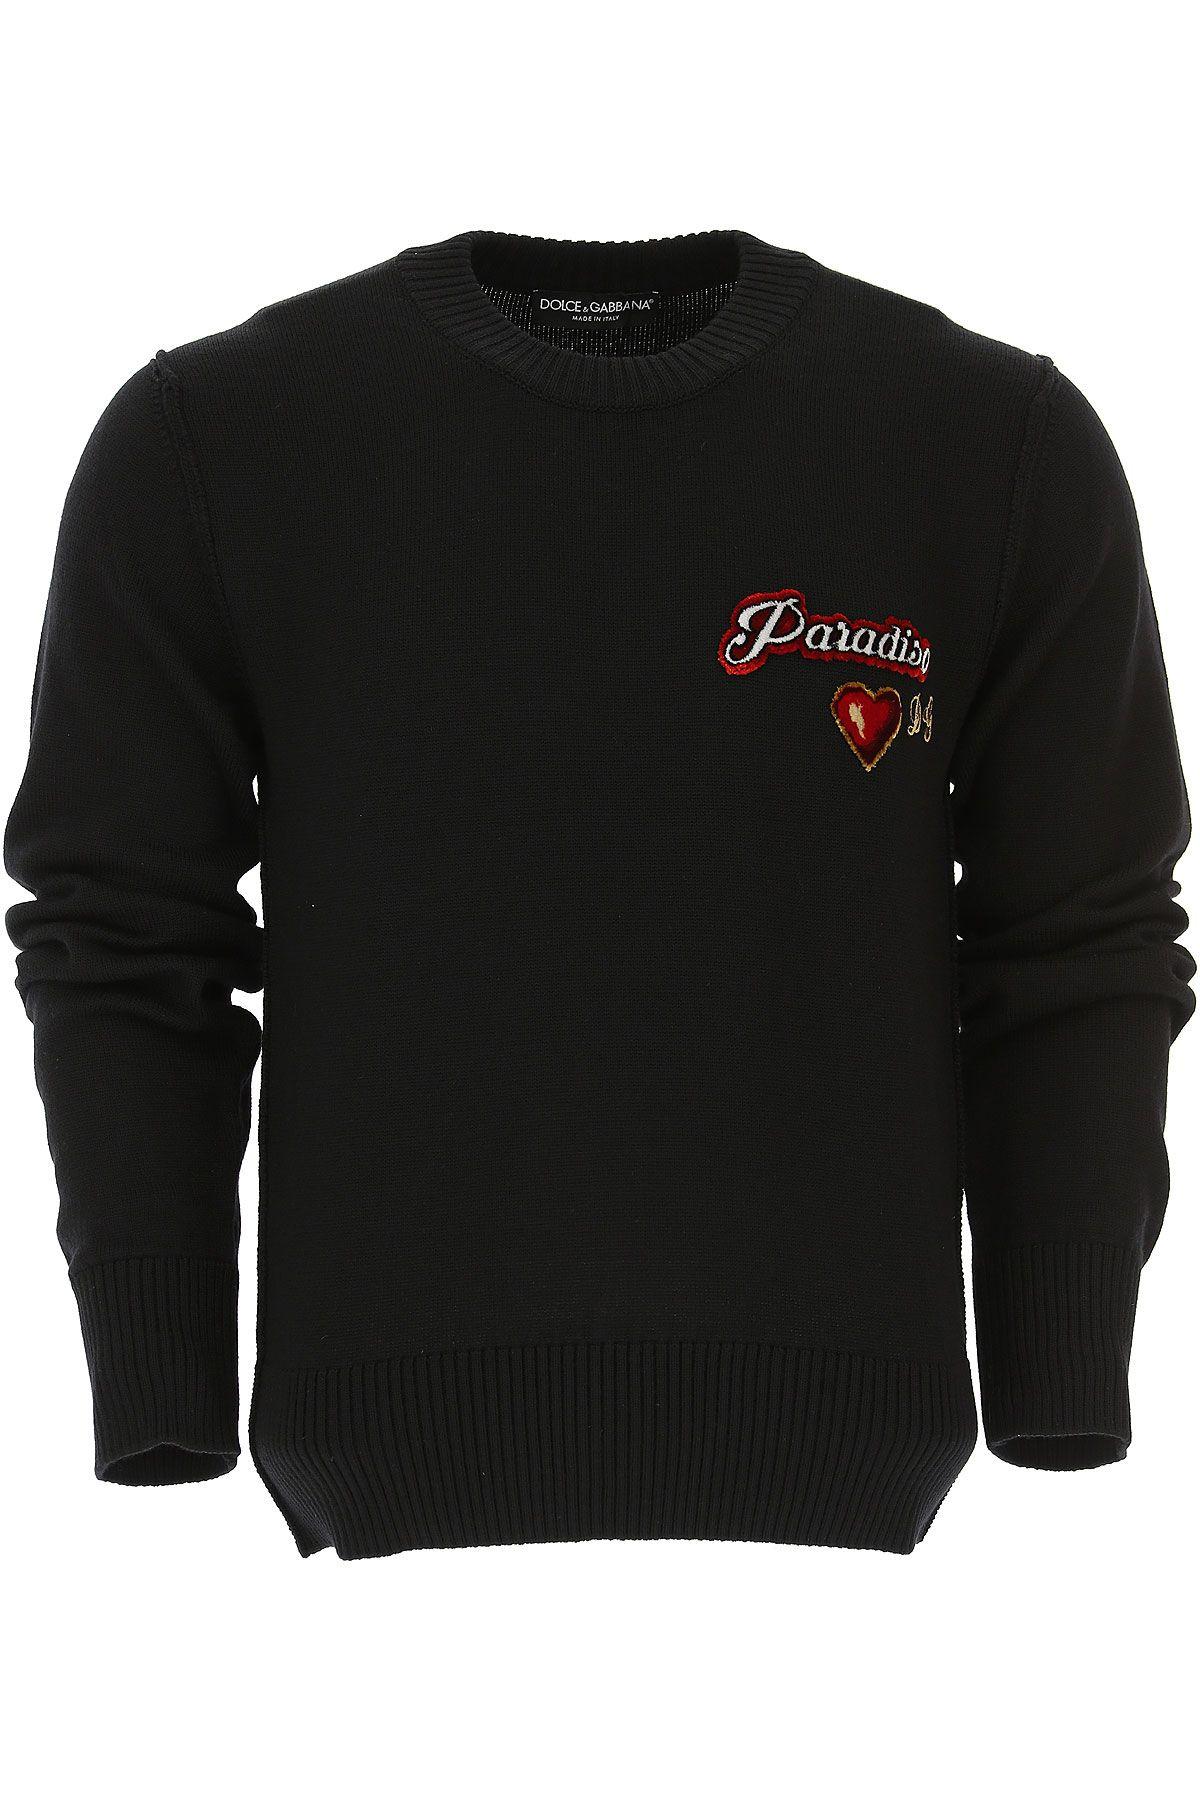 Red White Heart Logo - Dolce & Gabbana Clothing for Men Fall - Winter 2018/19 Black•Other ...